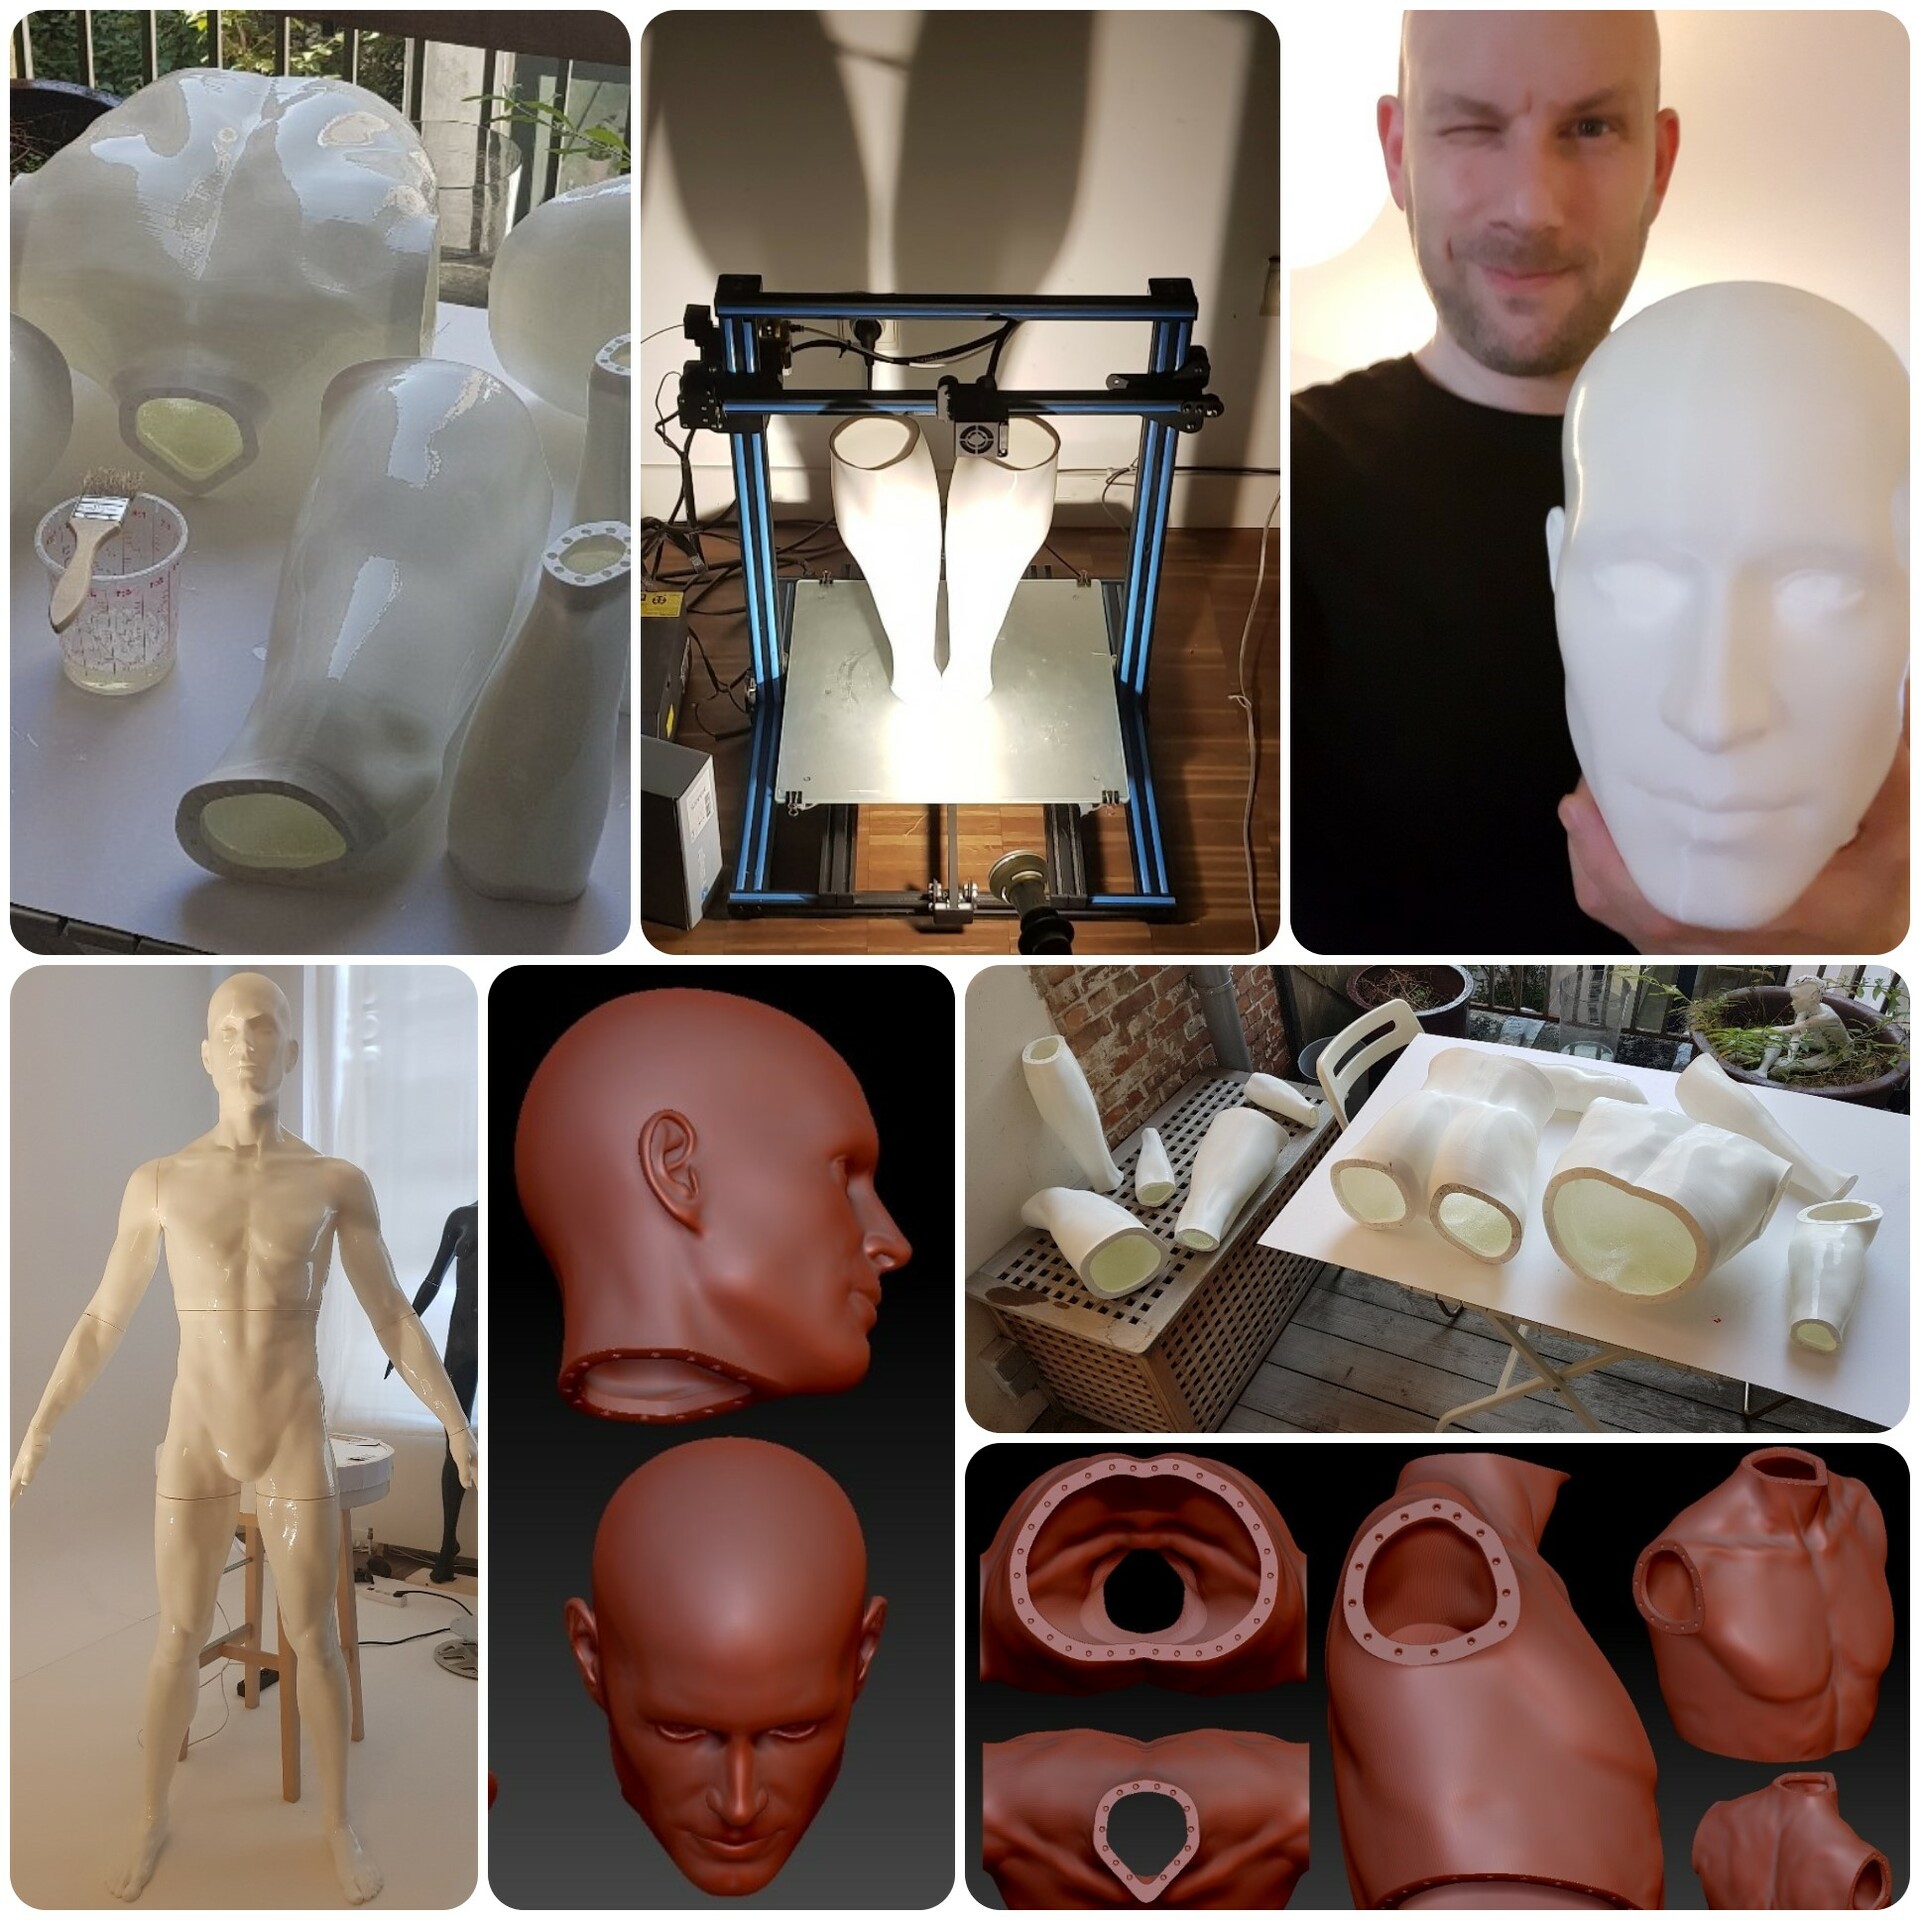 ArtStation - 3D printed man